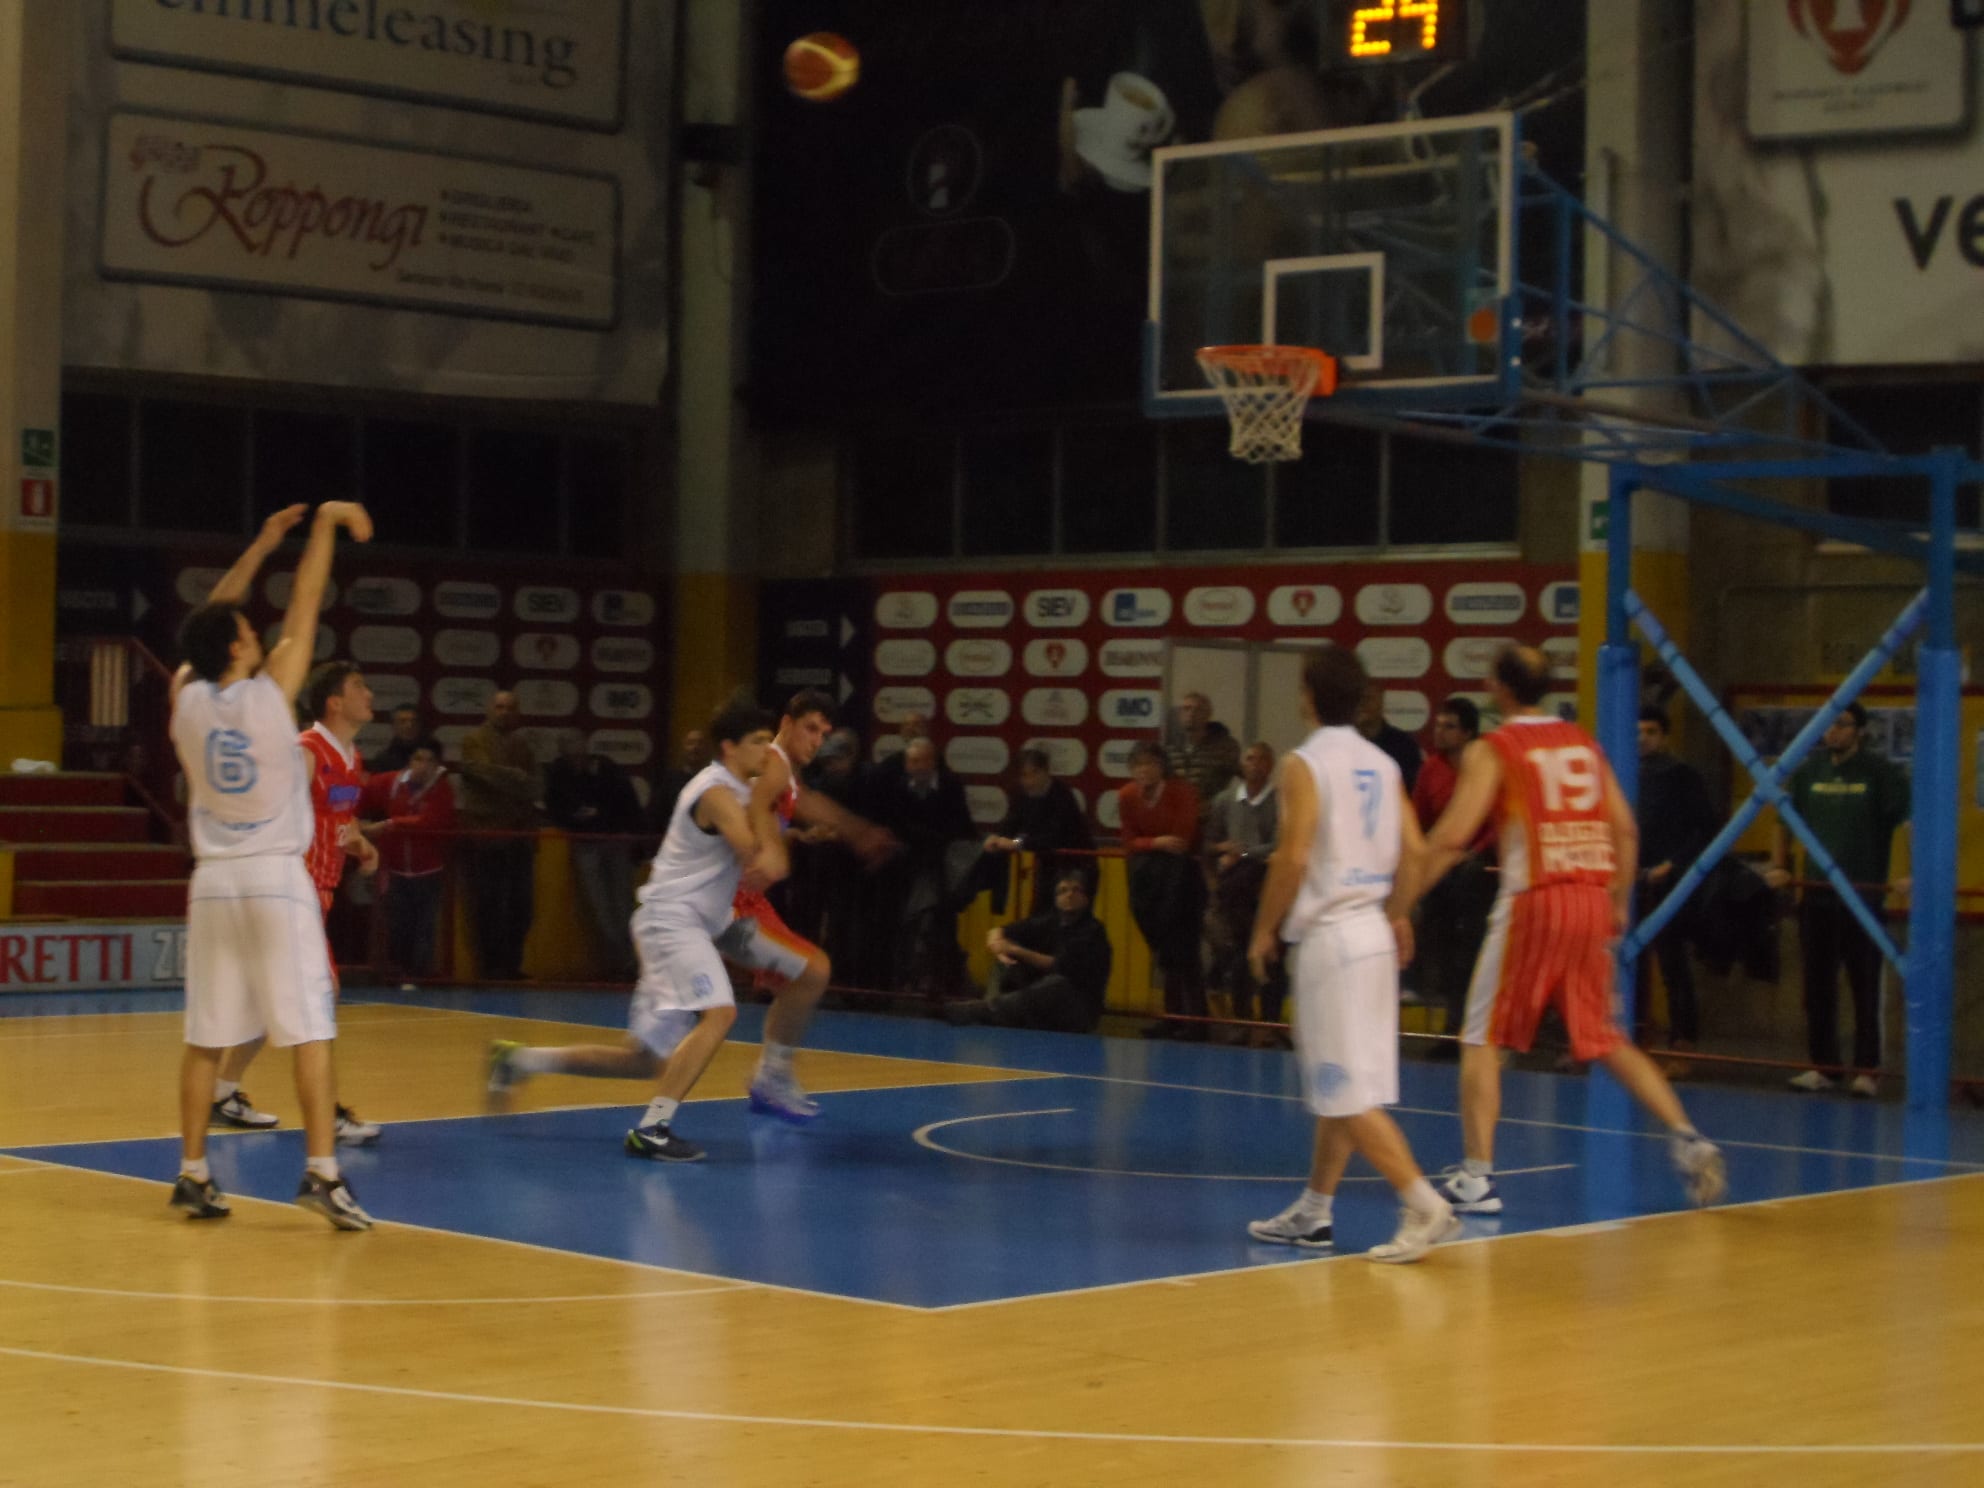 Basket Dnc: Saronno travolgente con Bergamo “vede” la vetta